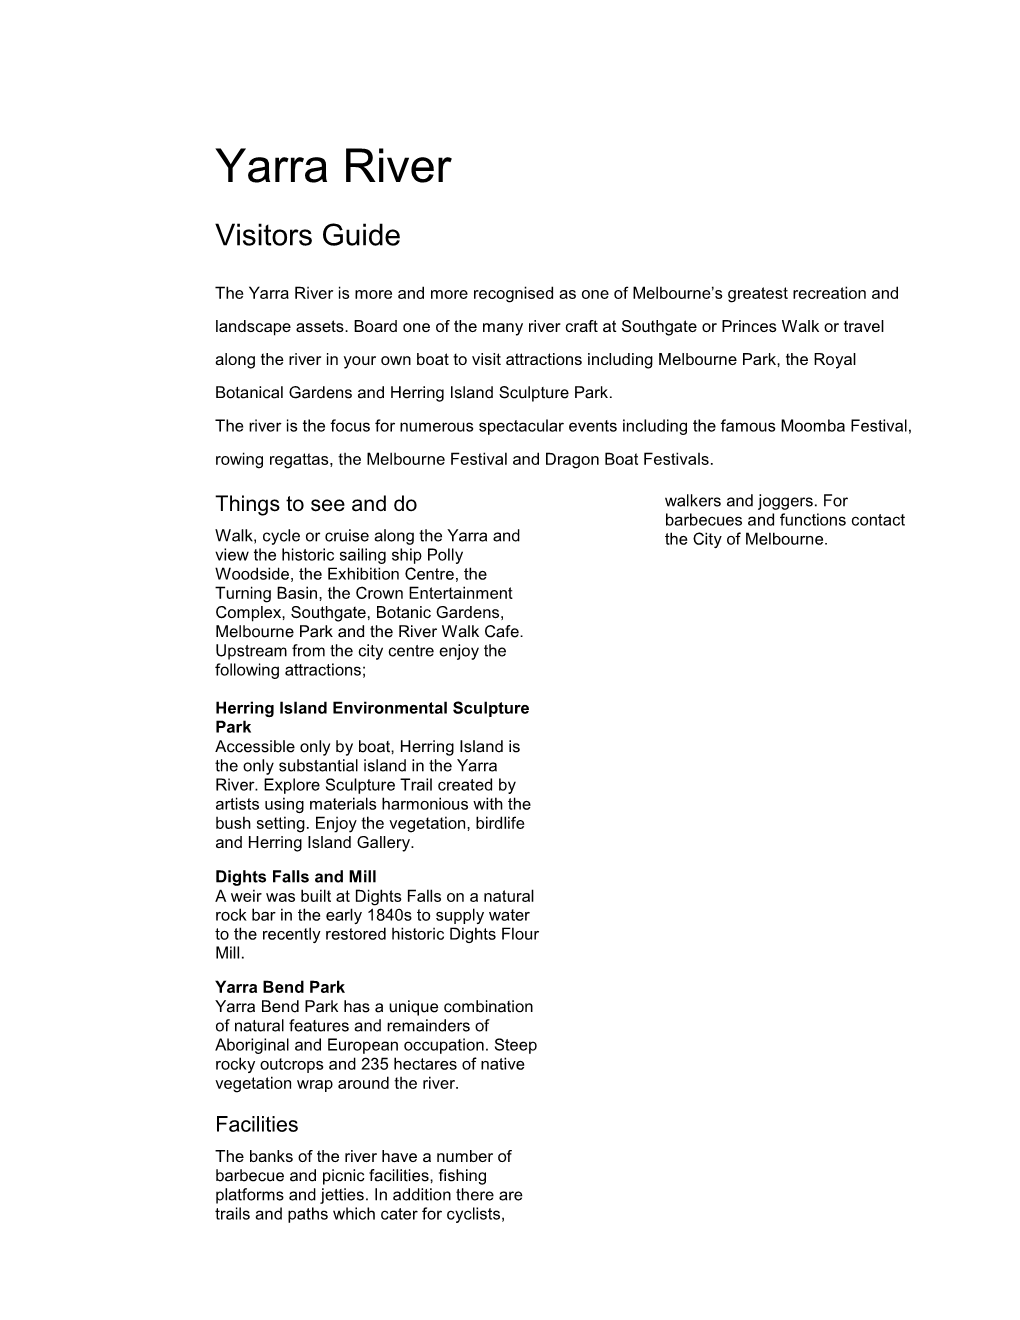 Yarra River Visitor Guide